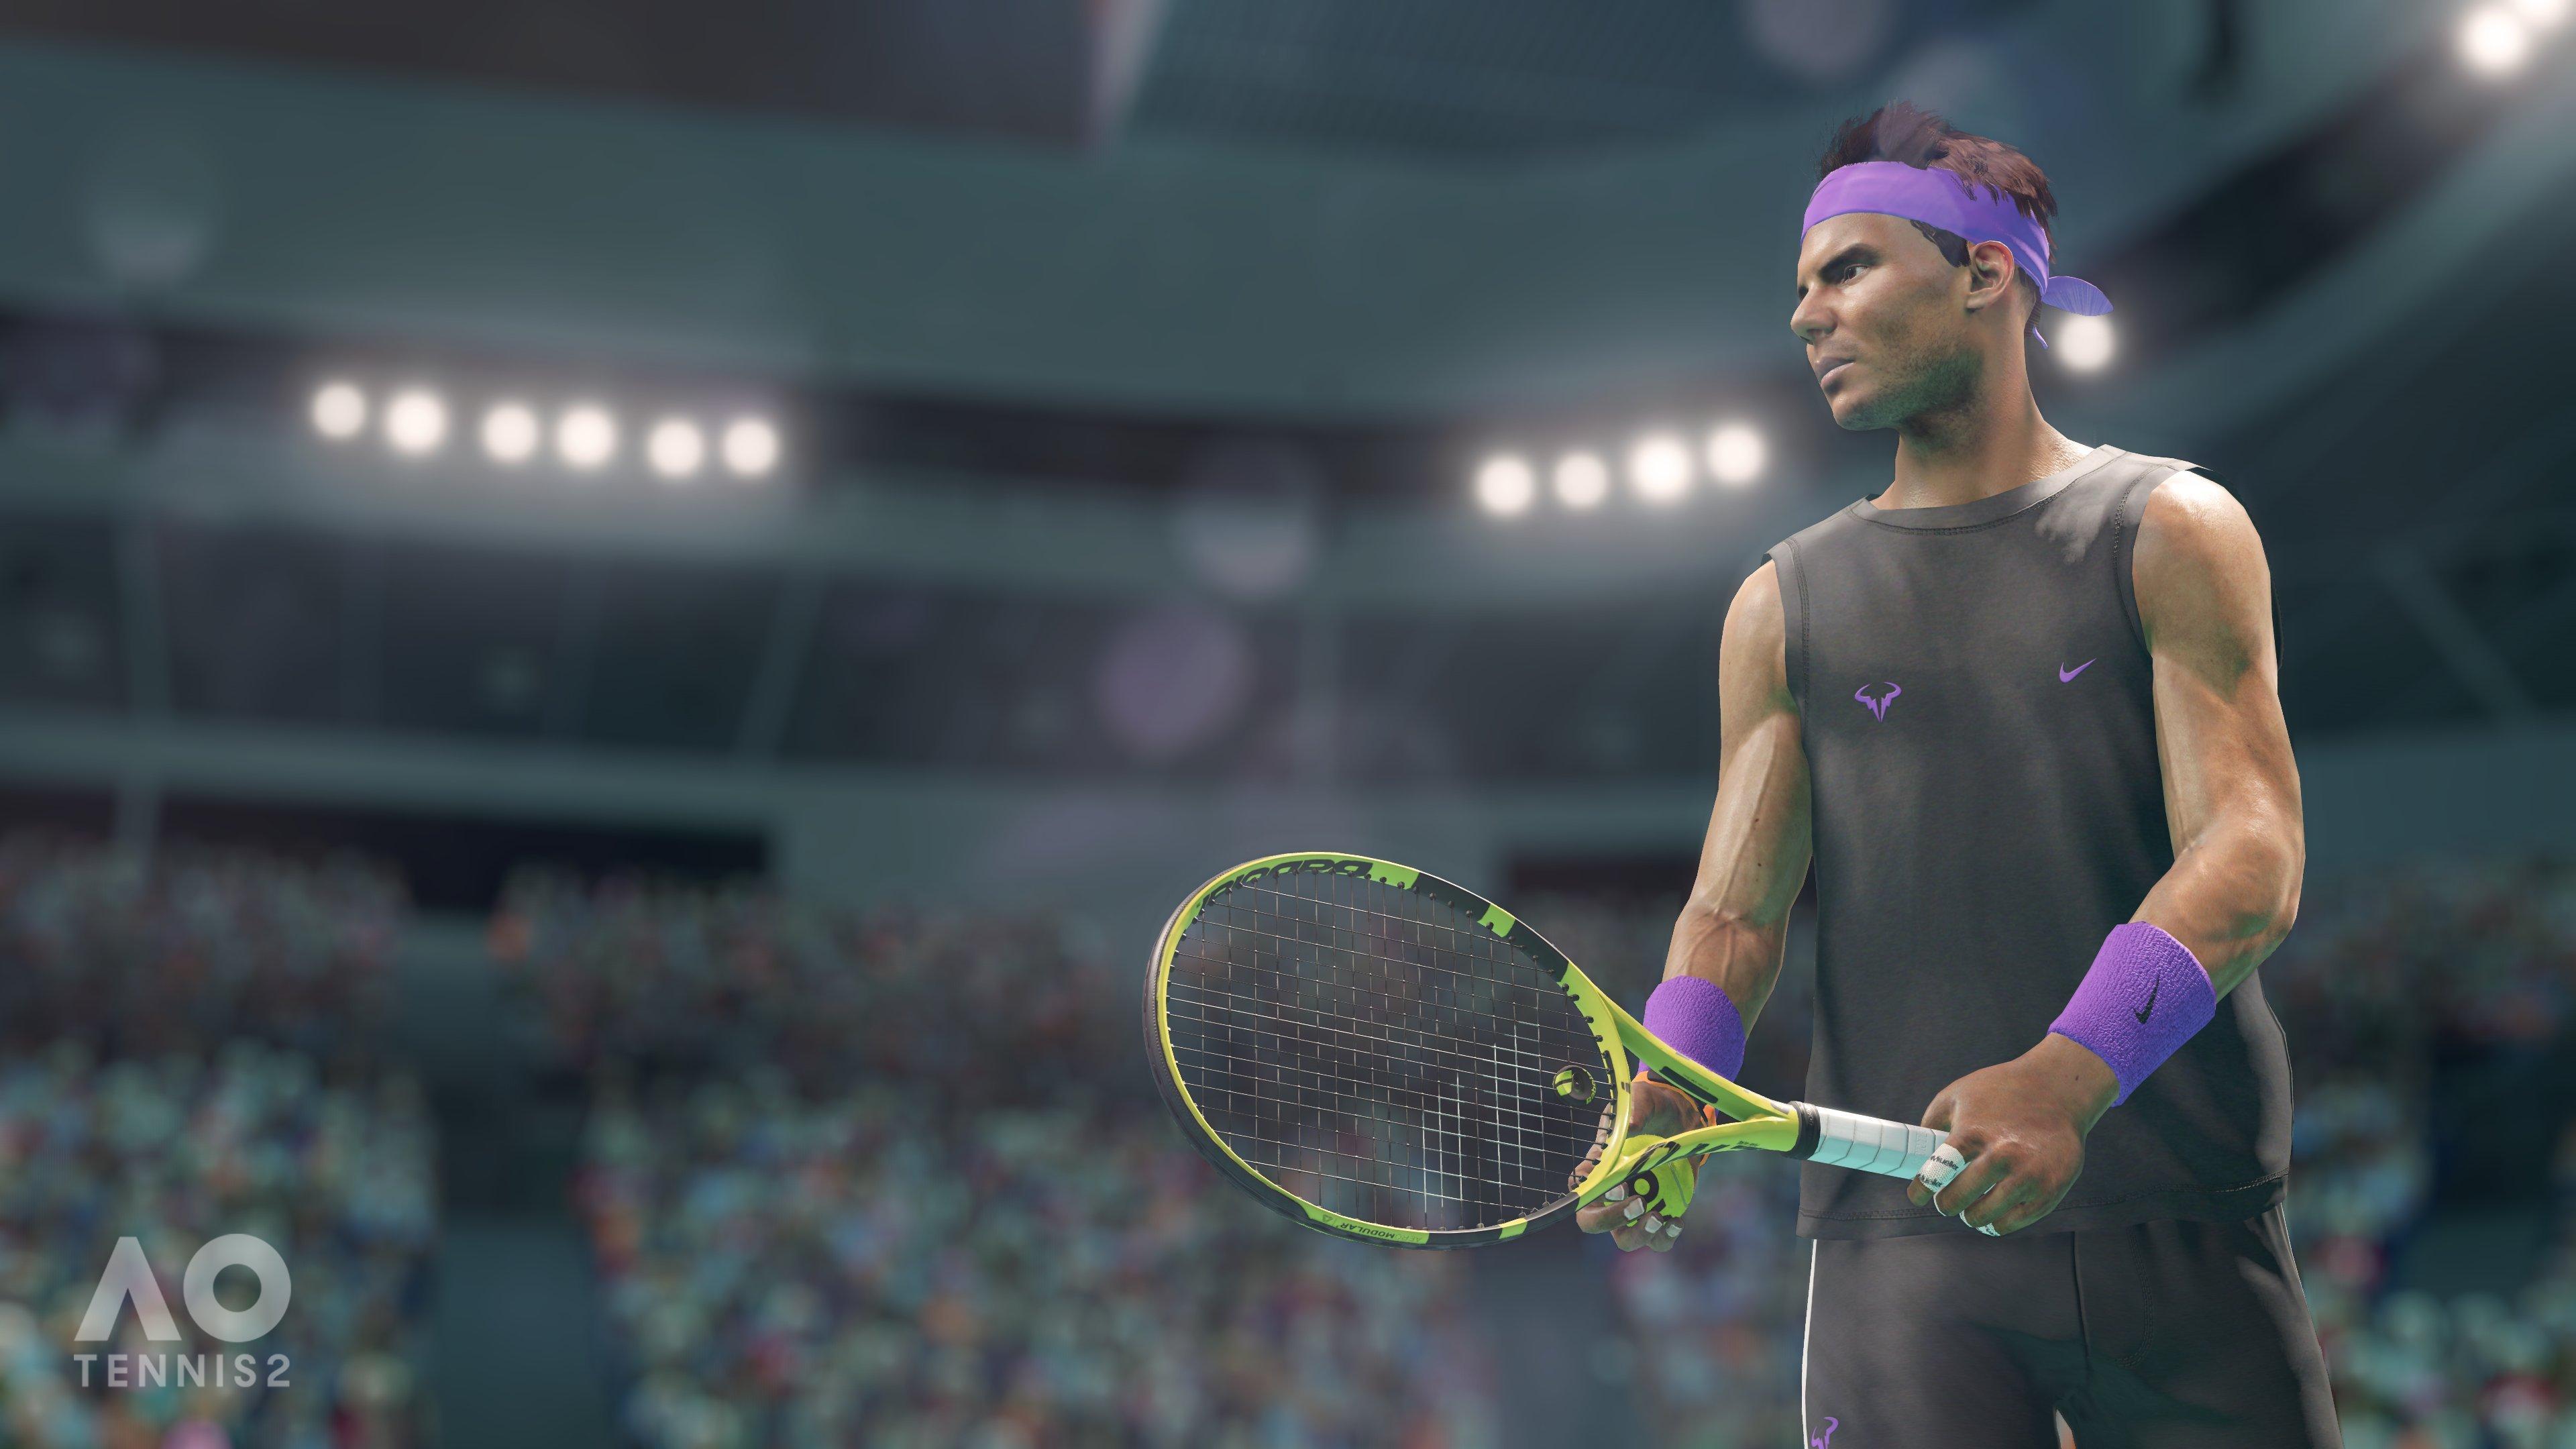 AO Tennis 2 - PlayStation 4, PlayStation 4